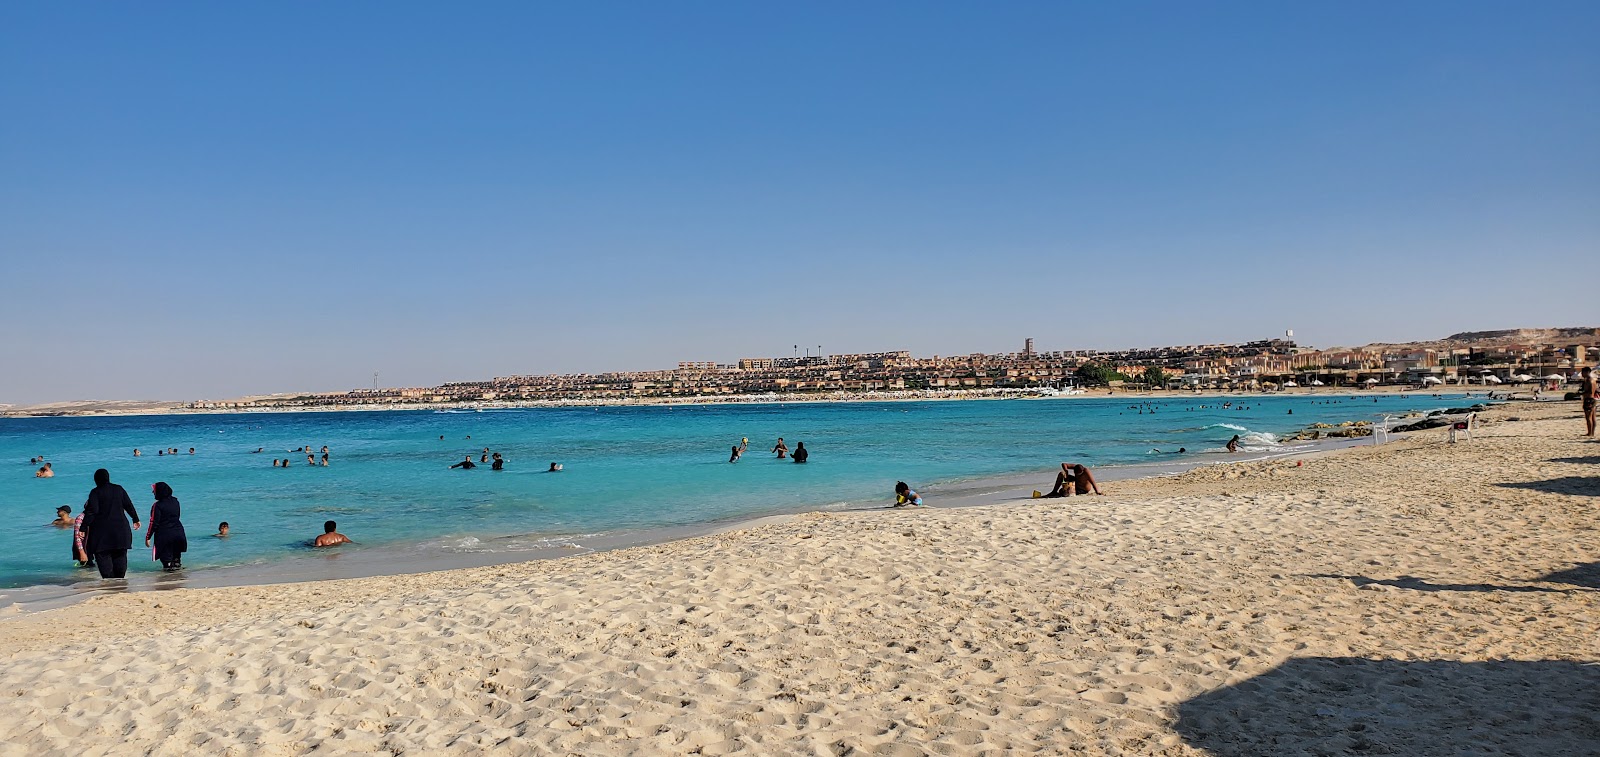 Foto af Ghazala Beach II - populært sted blandt afslapningskendere